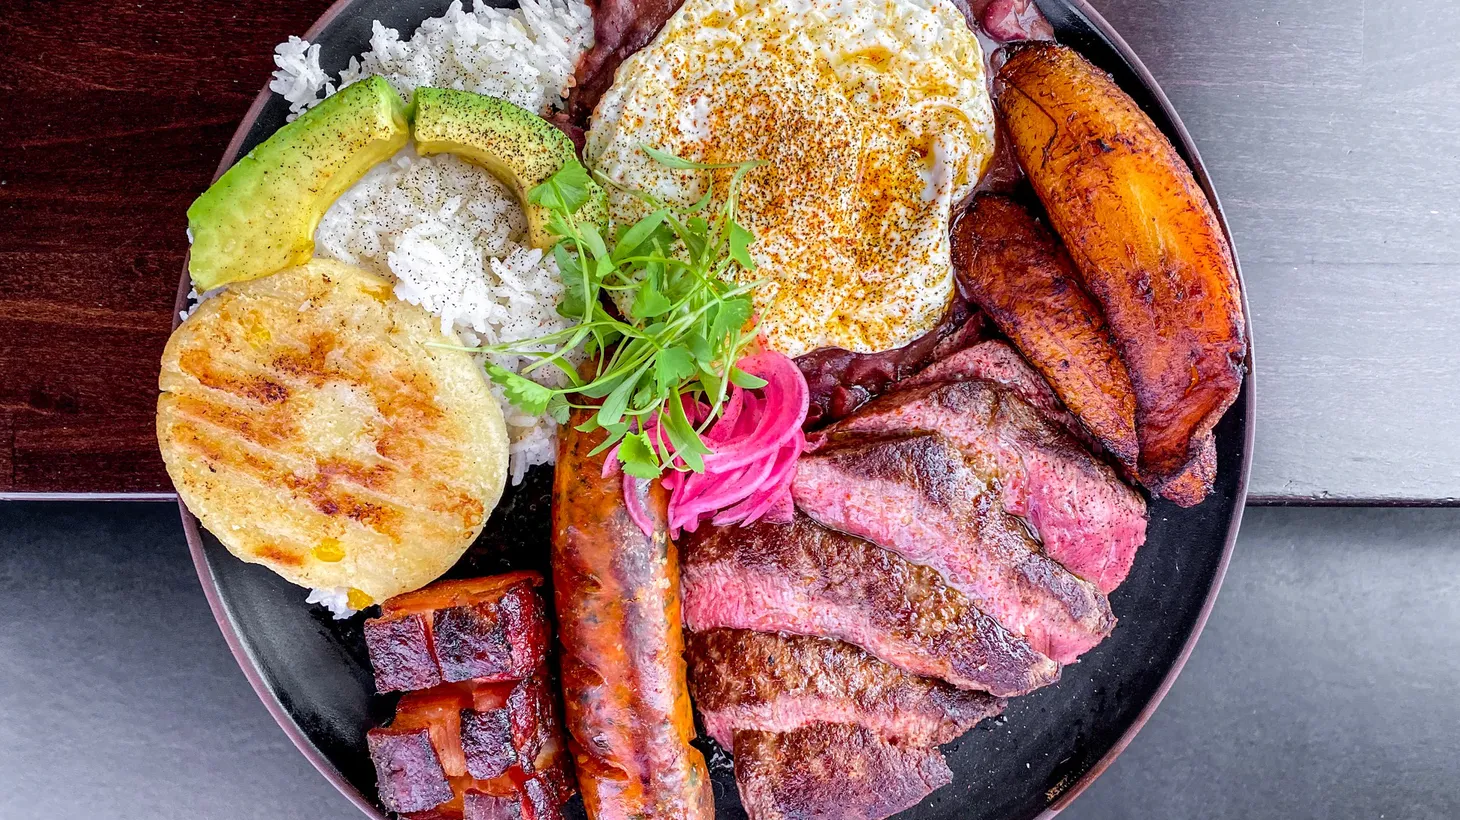 Bandeja paisa and yucca chorreadas encourage diners to share